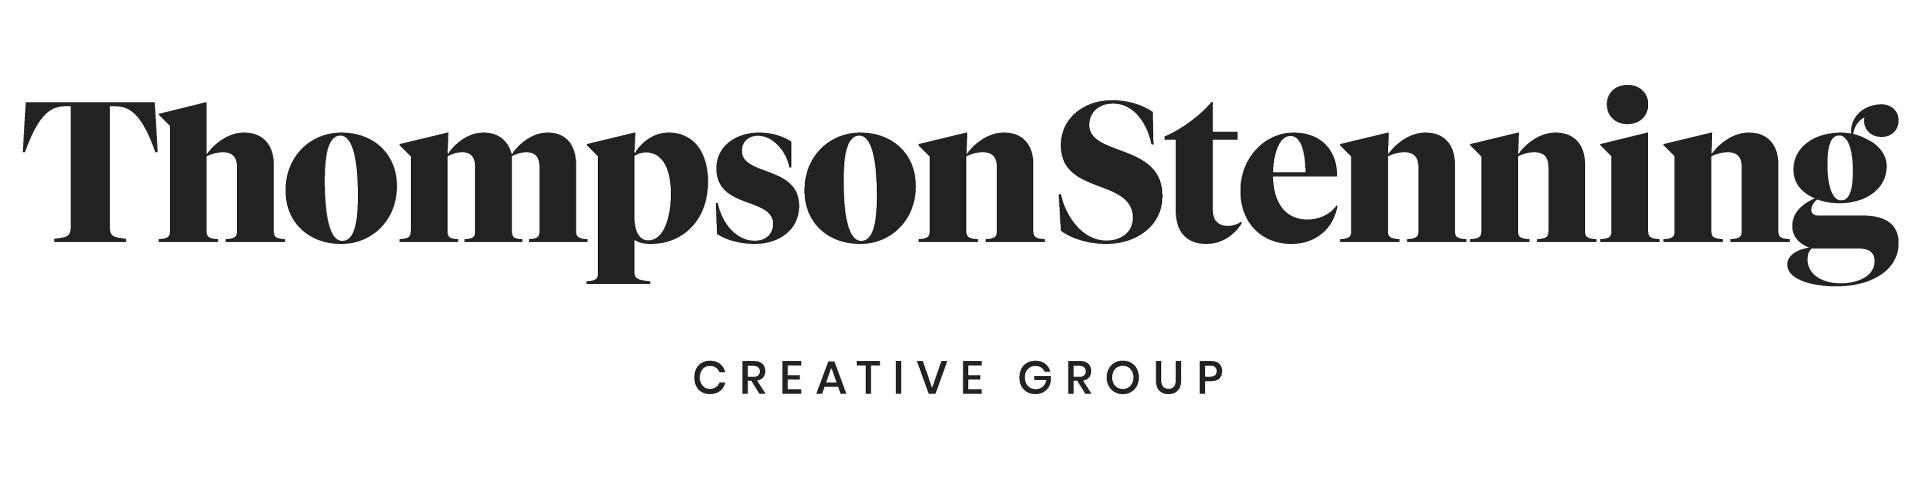 ThompsonStenning Creative Group